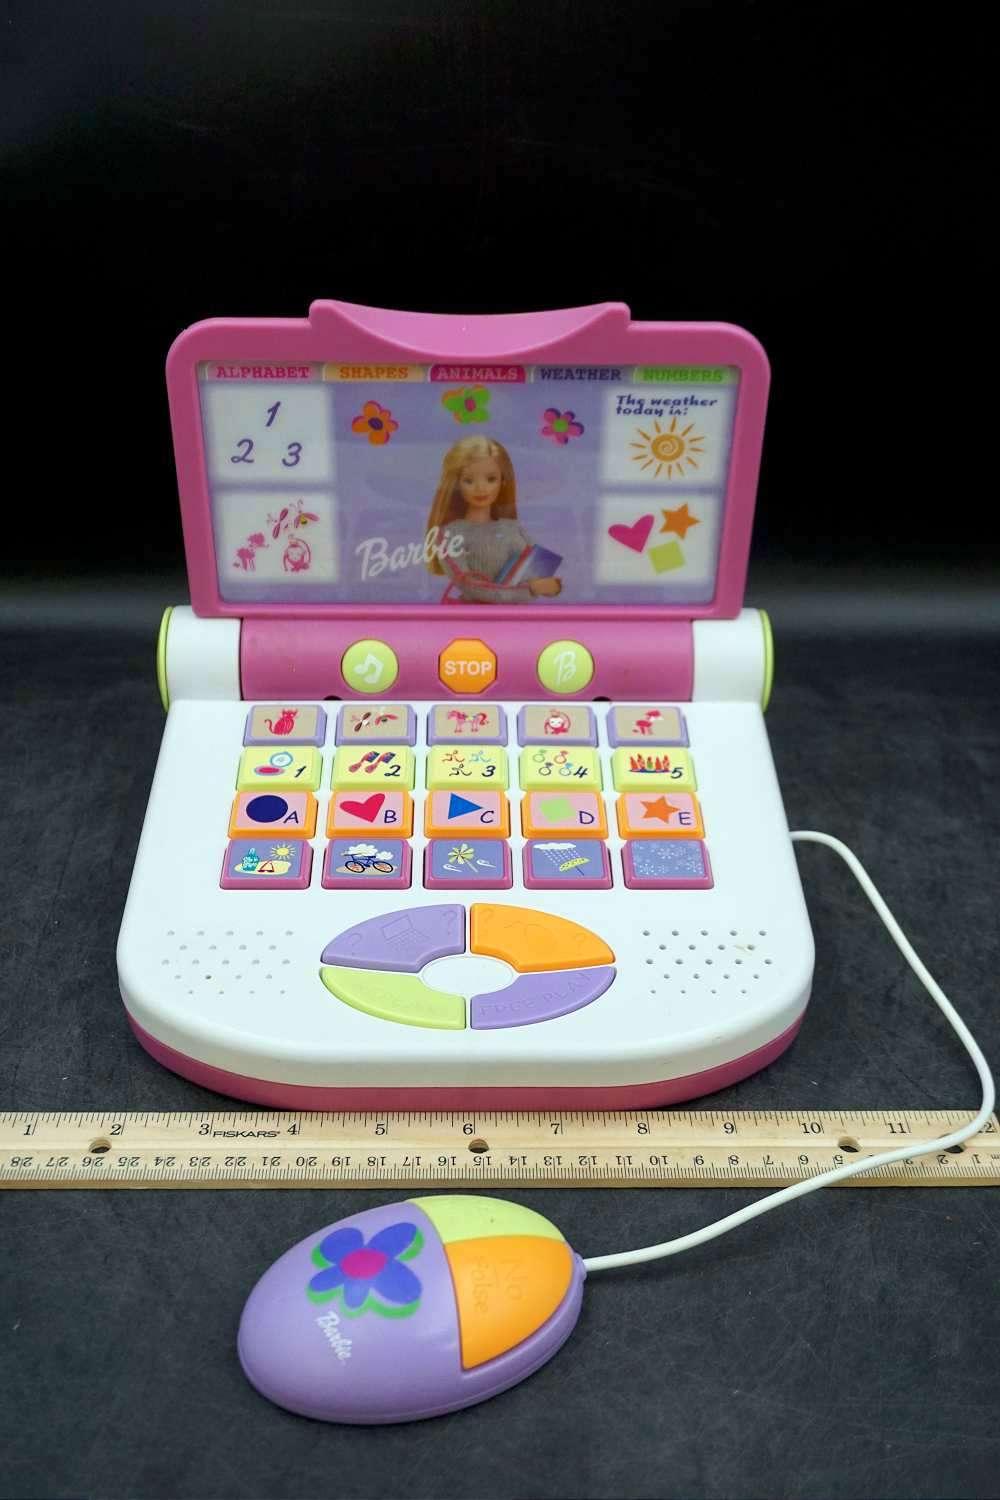 Barbie laptop computer game.